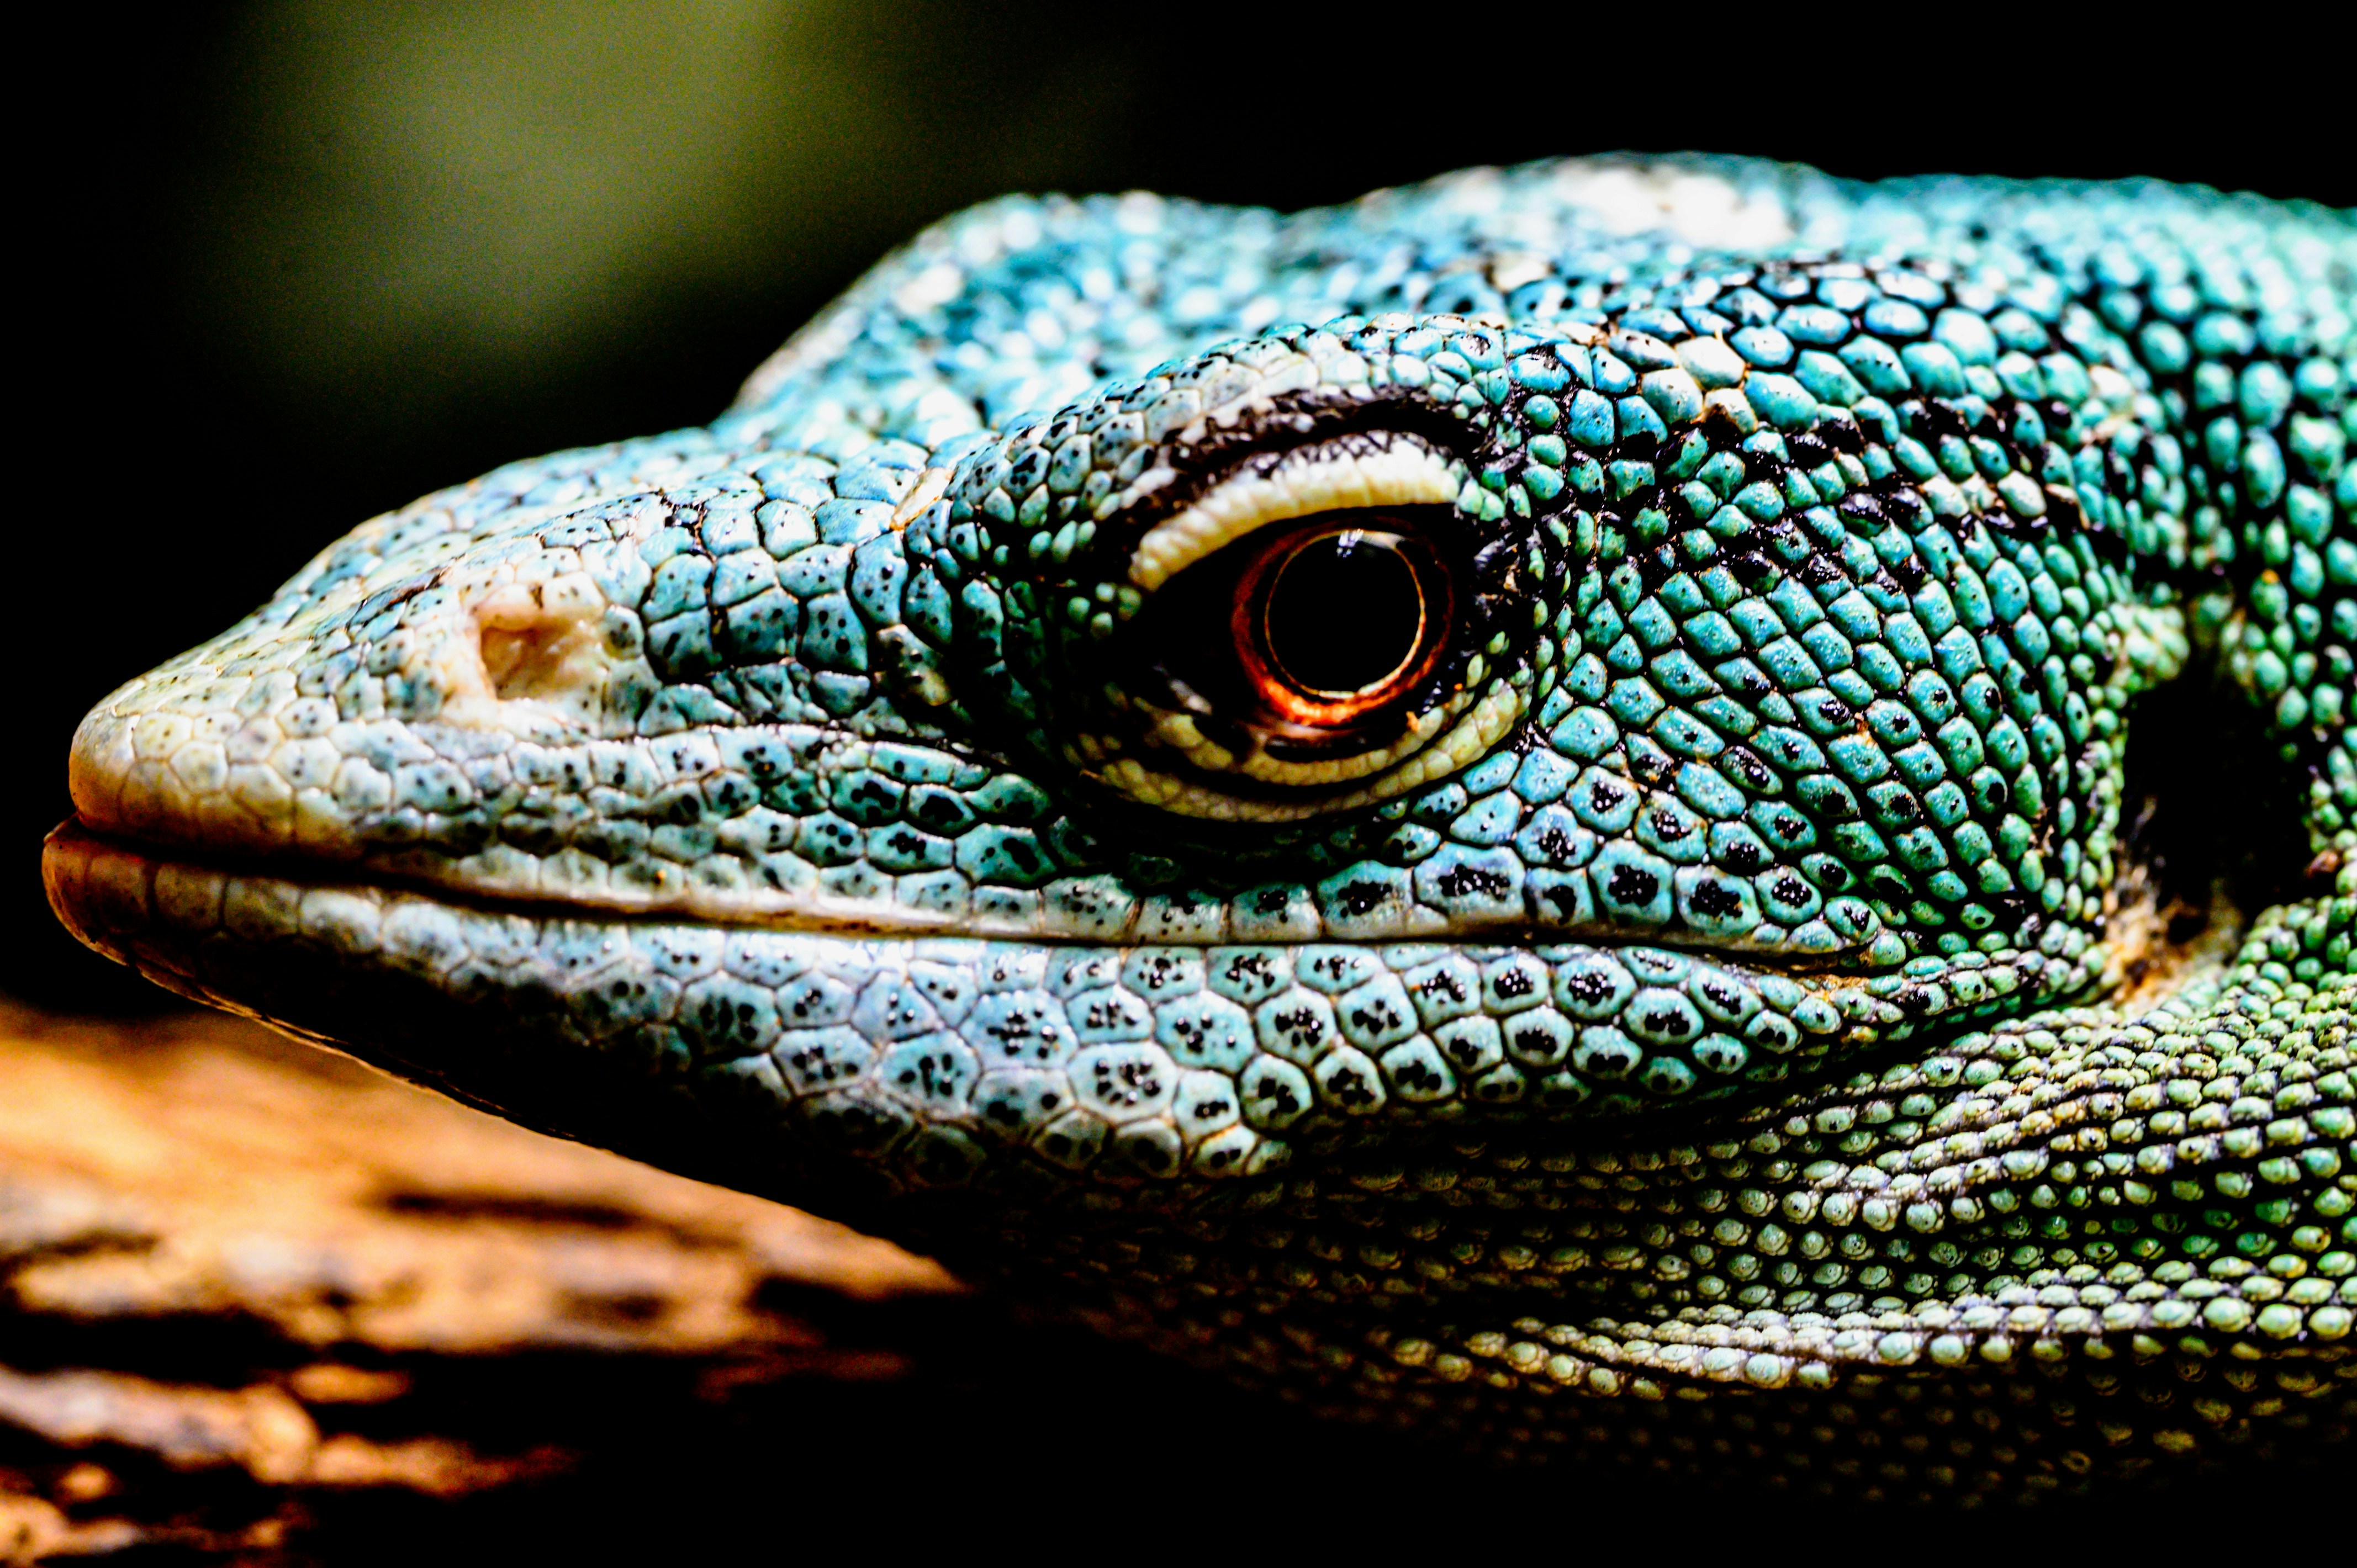 Green-headed monitor lizard